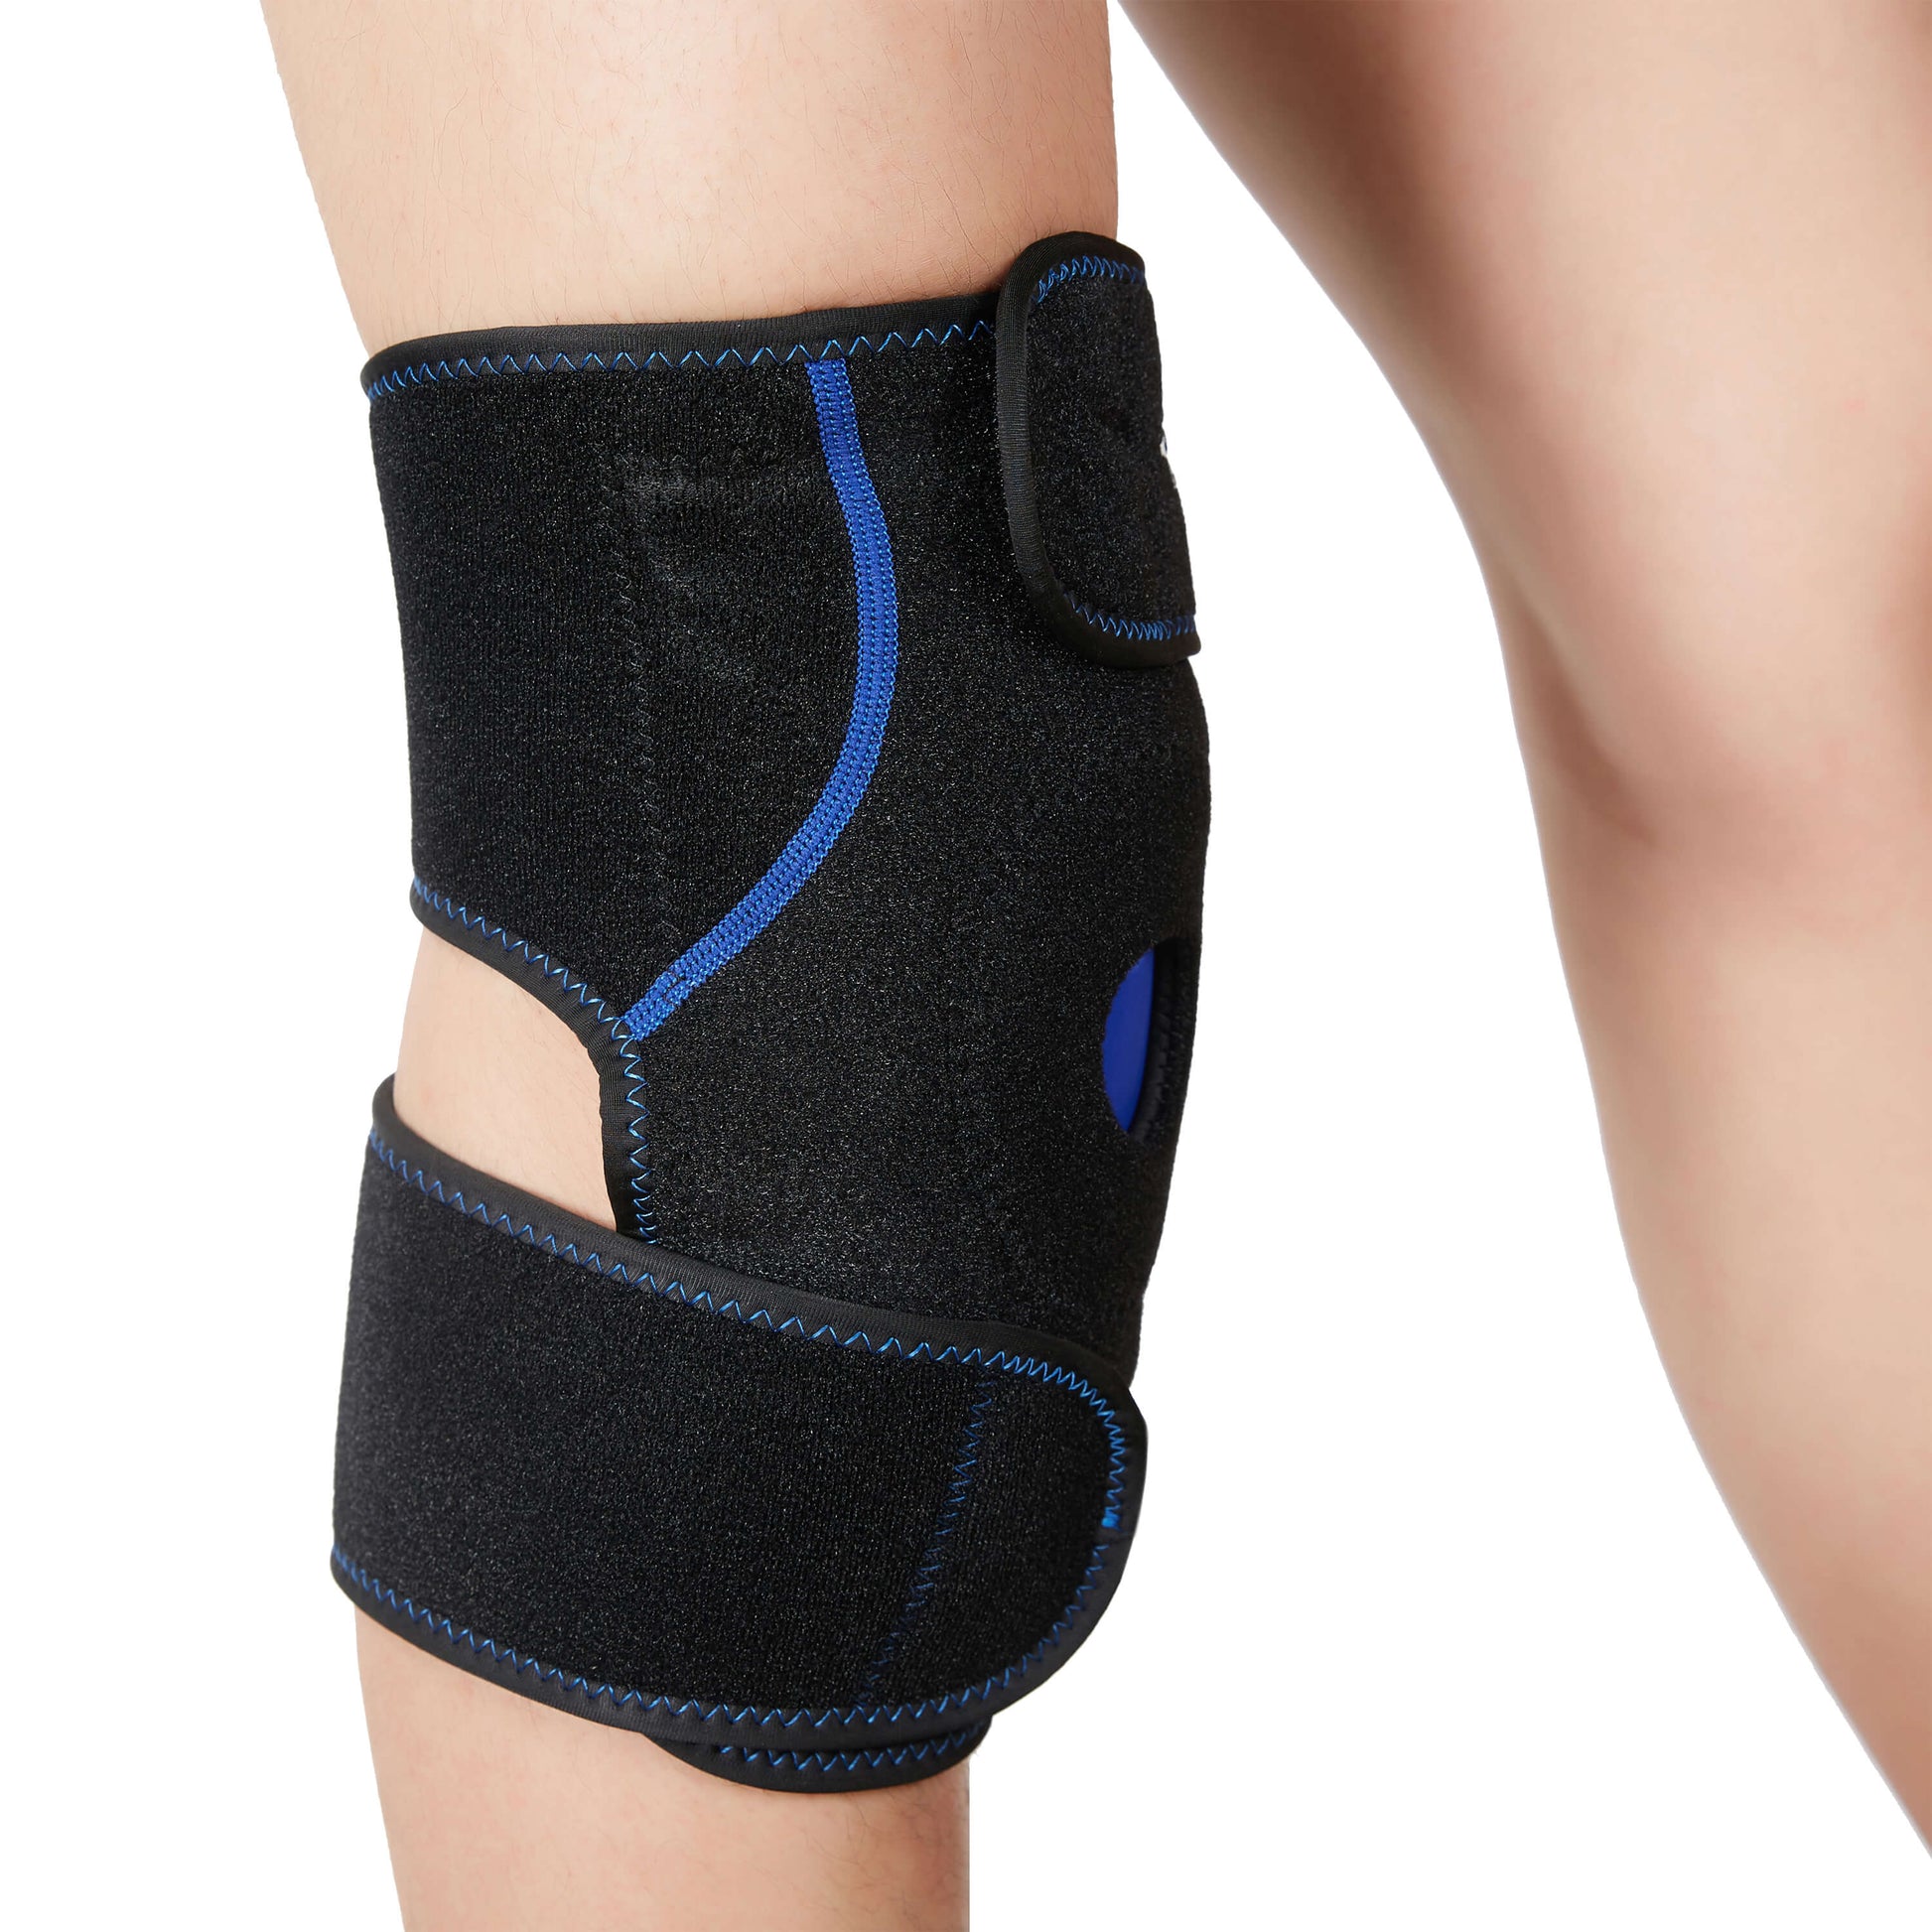 Mars Wellness Knee Ice Wrap Pack - Gel Compression Brace Cold/Hot